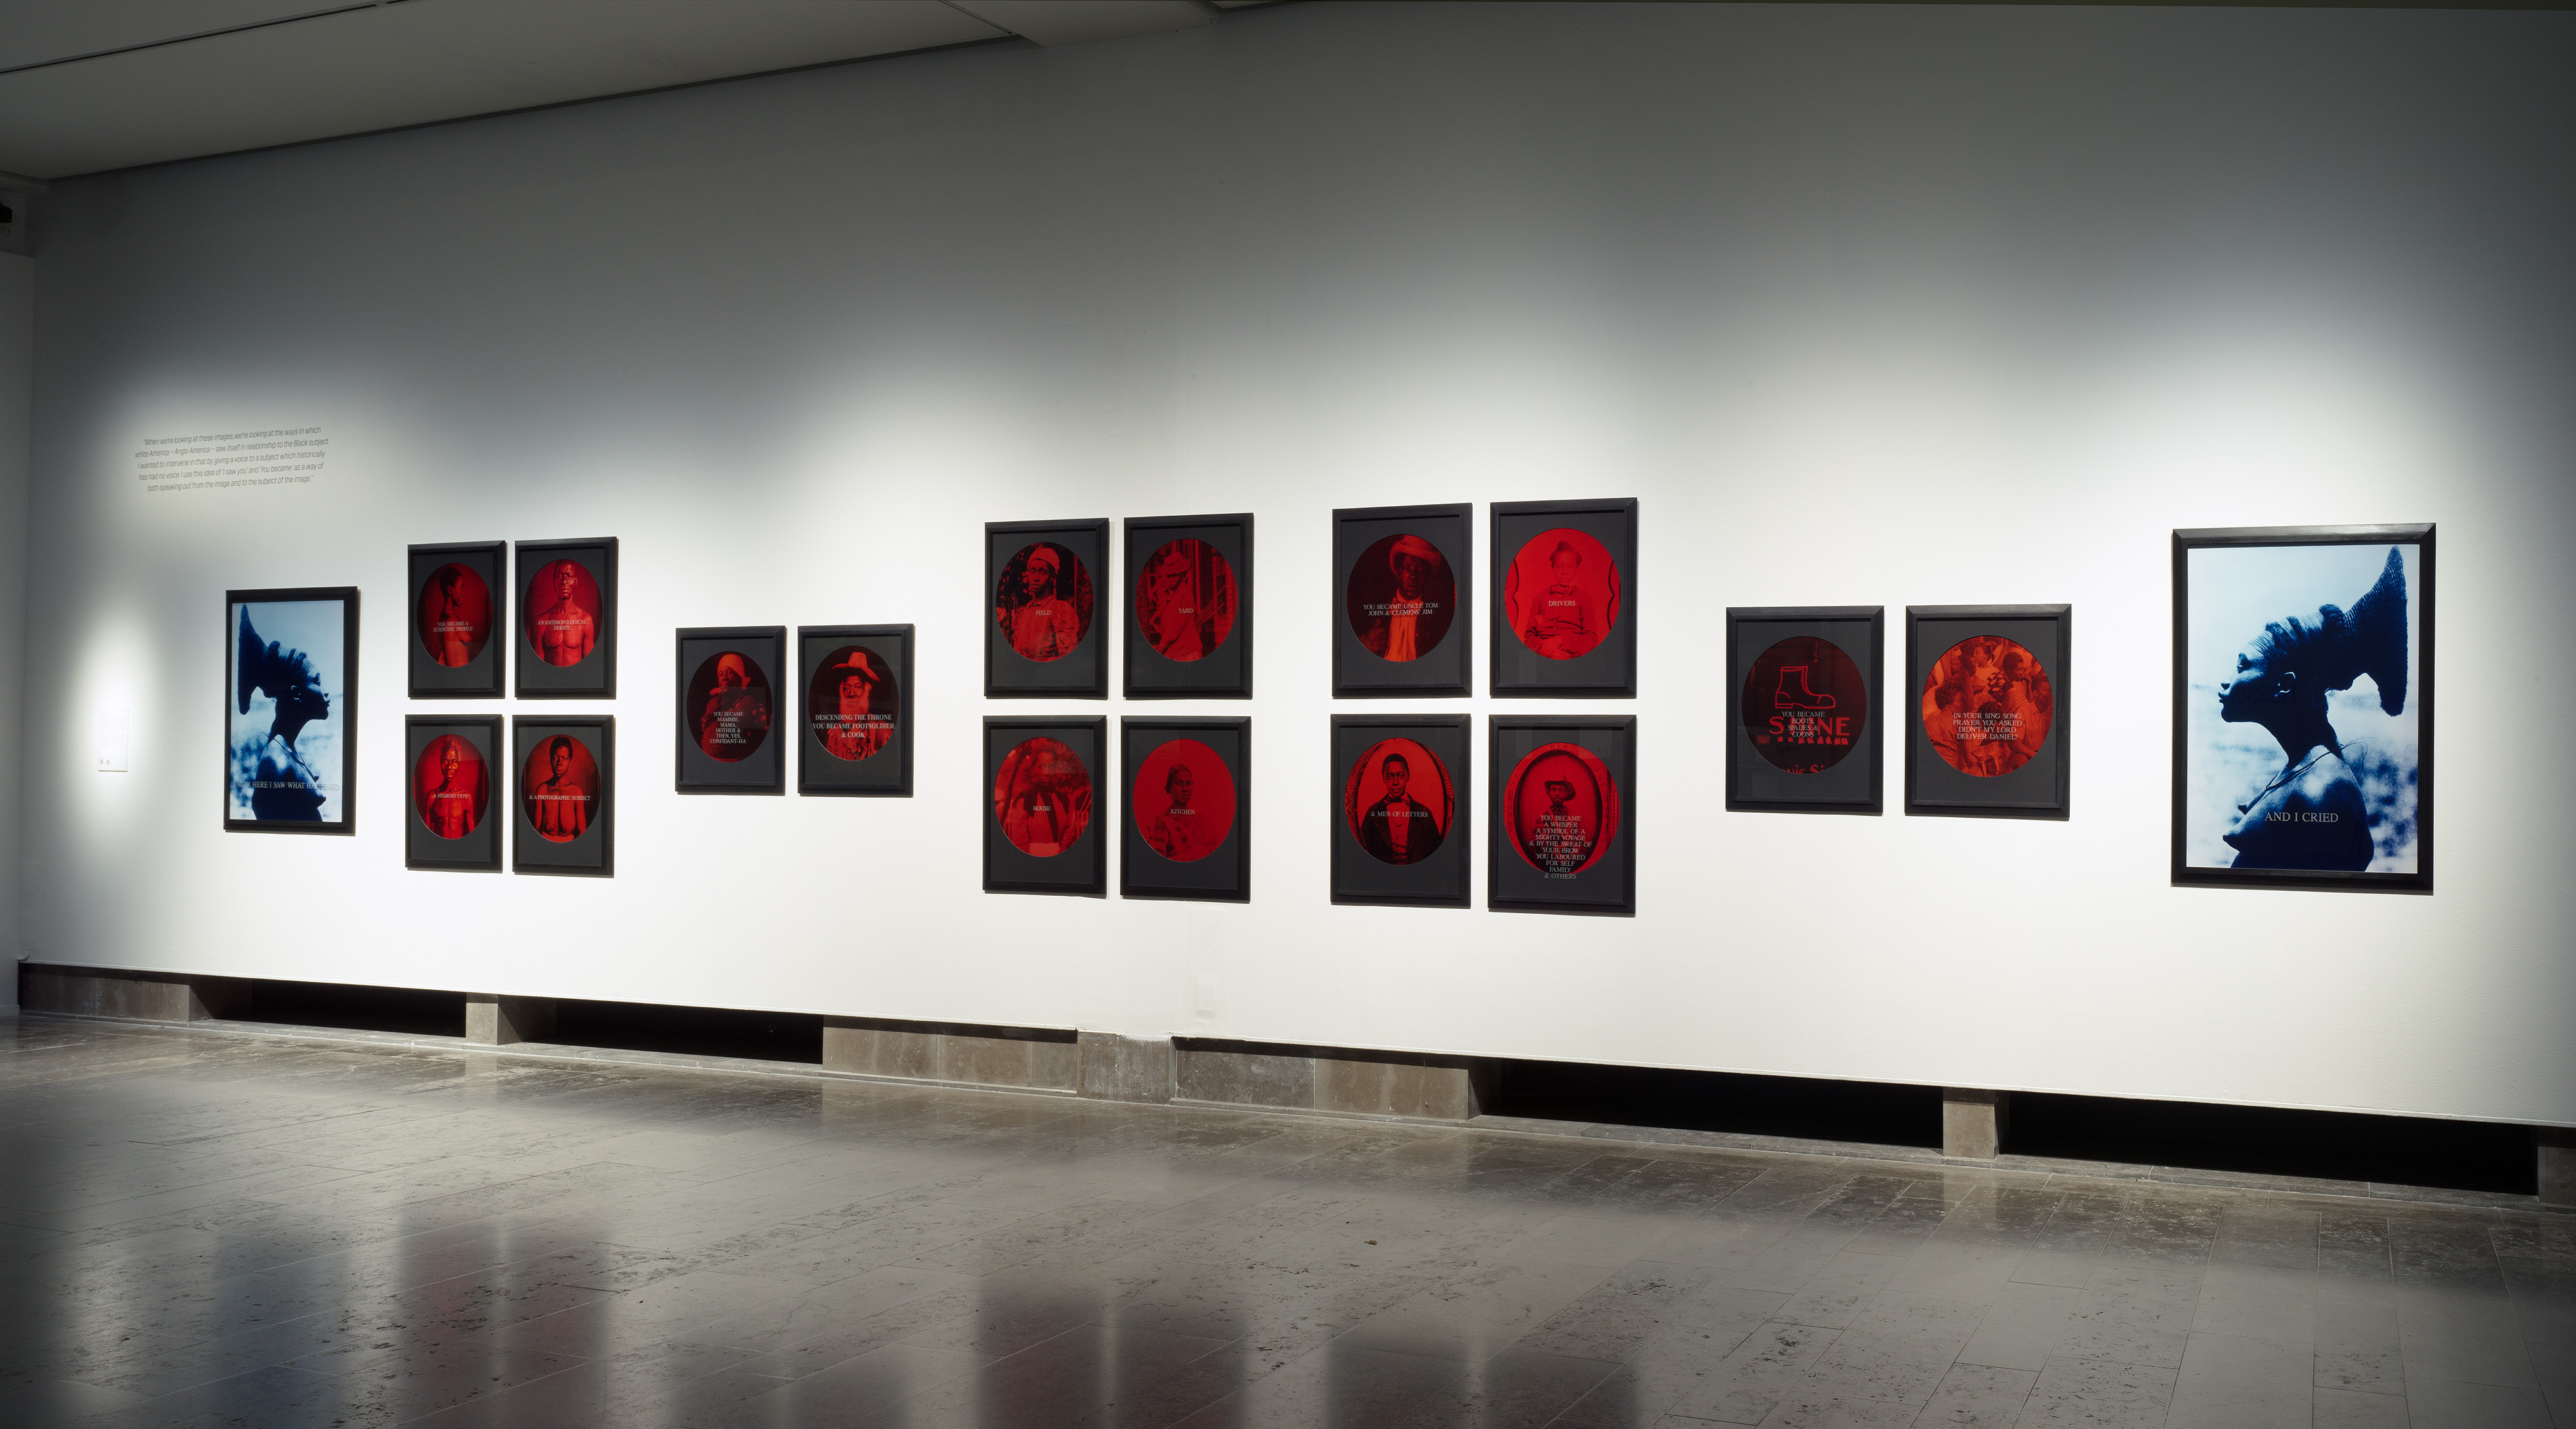 Galerie Barbara Thumm \ Carrie Mae Weems – Hasselblad Award Winner 2023